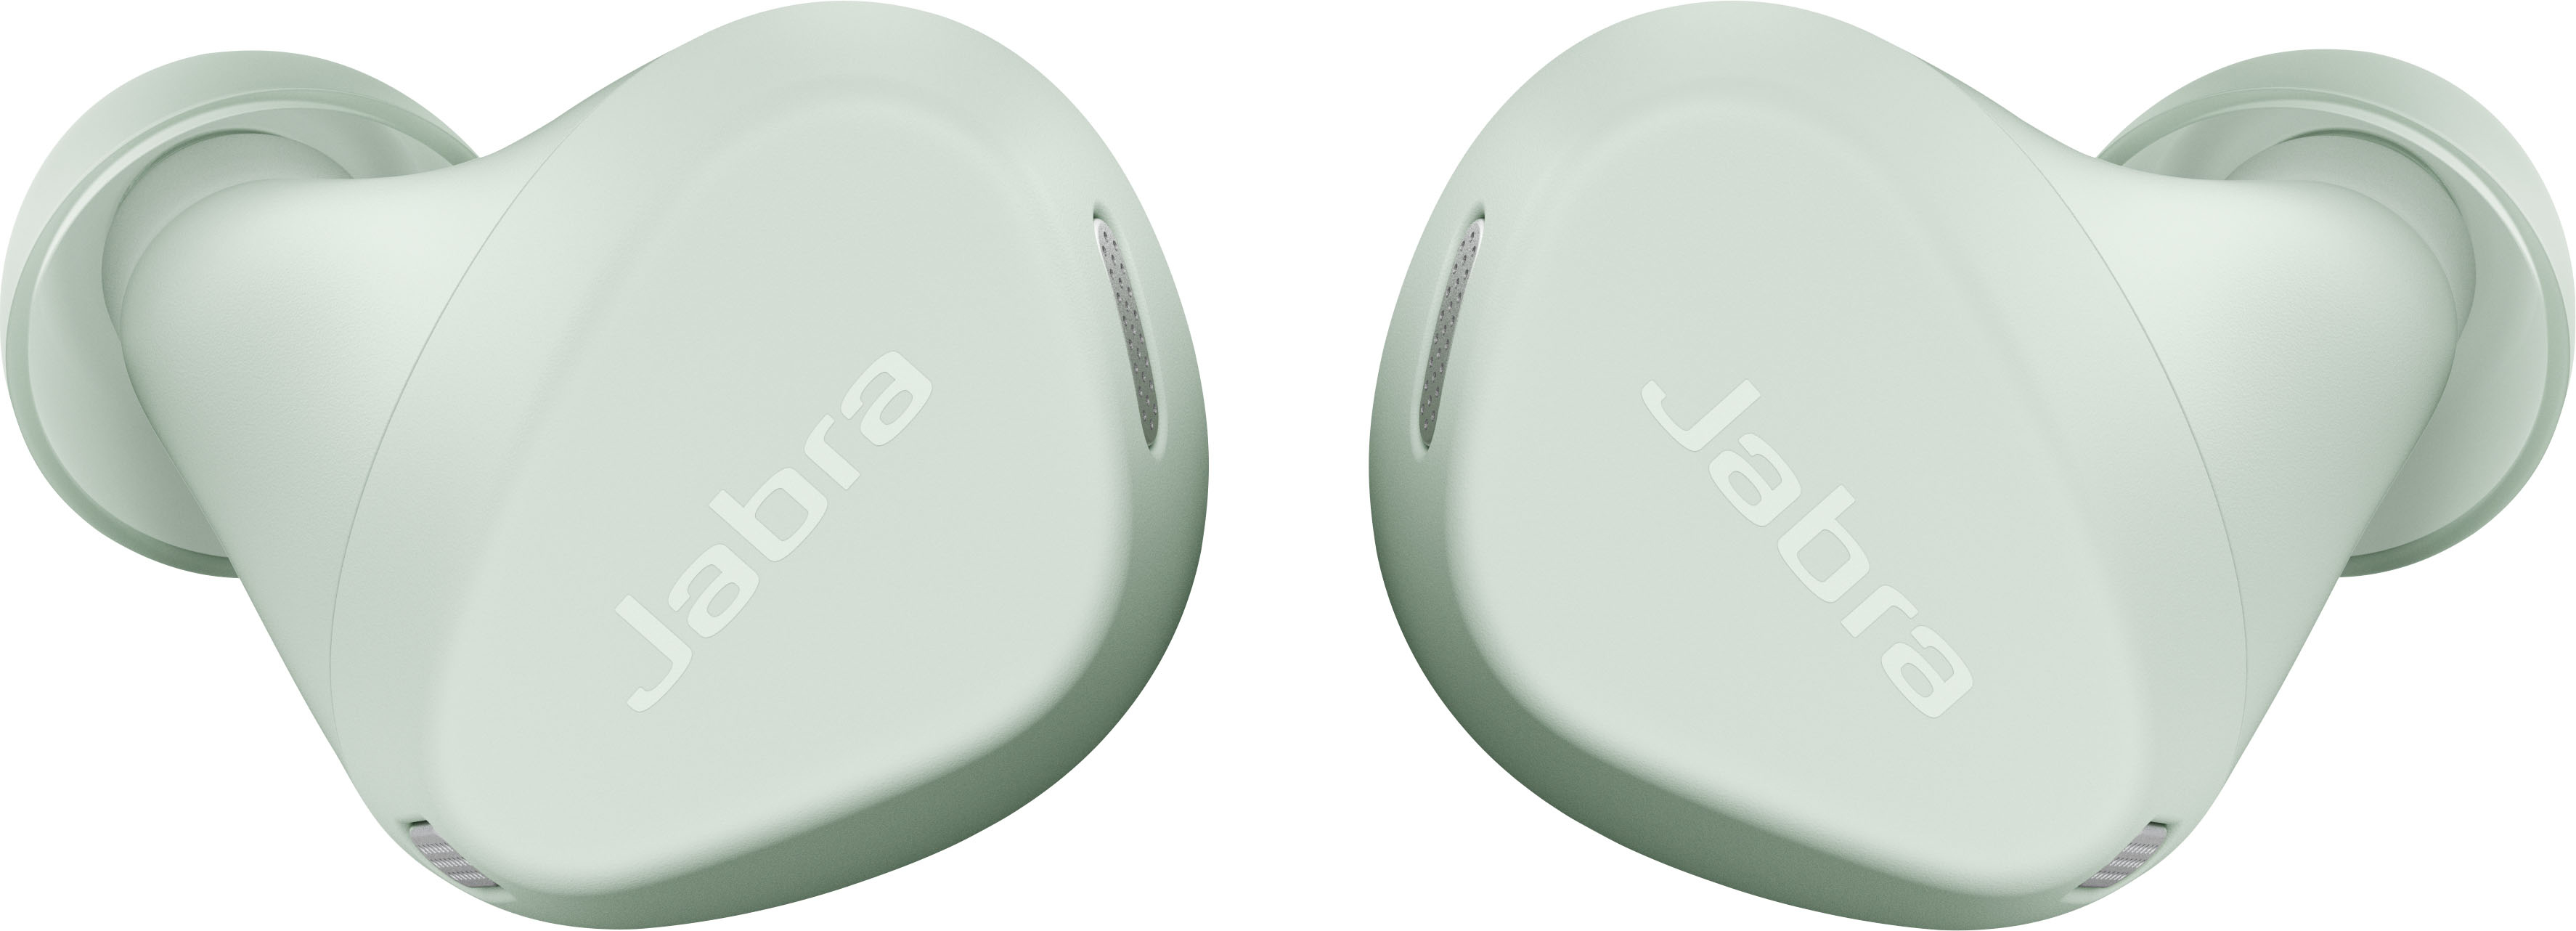 Jabra Elite 4 Active True Wireless Noise Cancelling In-Ear Headphones Black  100-99180000-02 - Best Buy